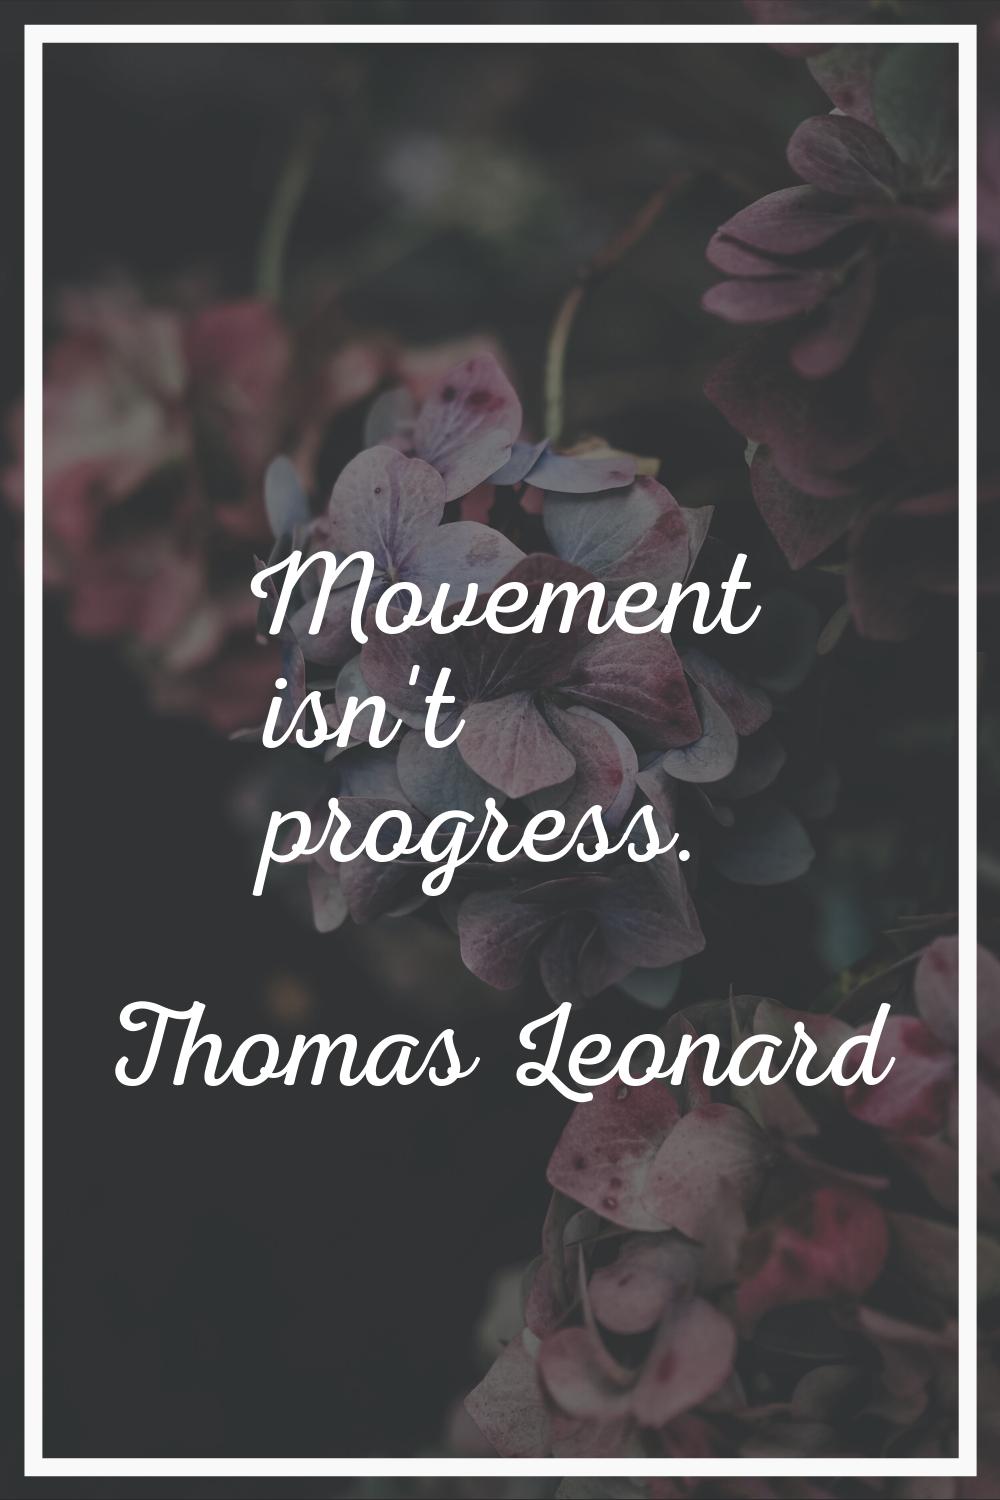 Movement isn't progress.